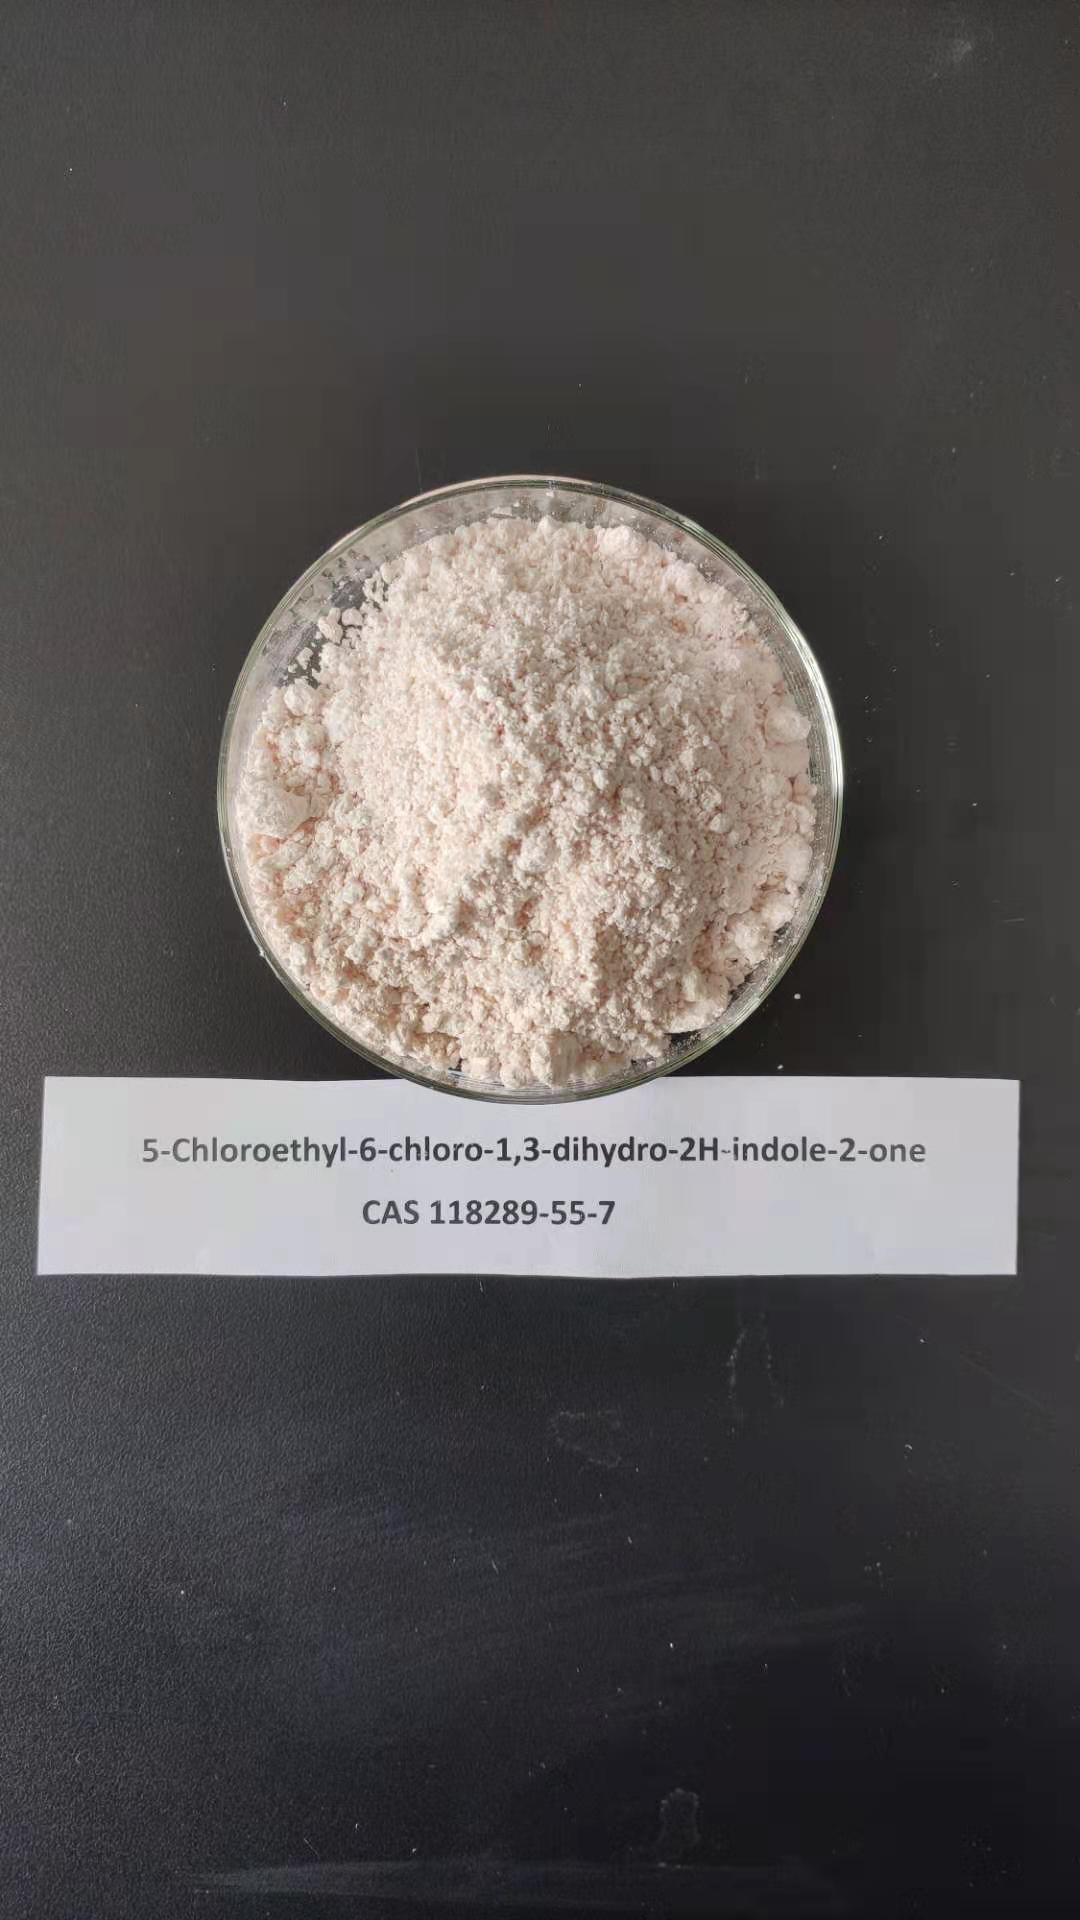 5-Chloroethyl-6-chloro-1,3-dihydro-2H-indole-2-one,CAS 118289-55-7 Featured Image